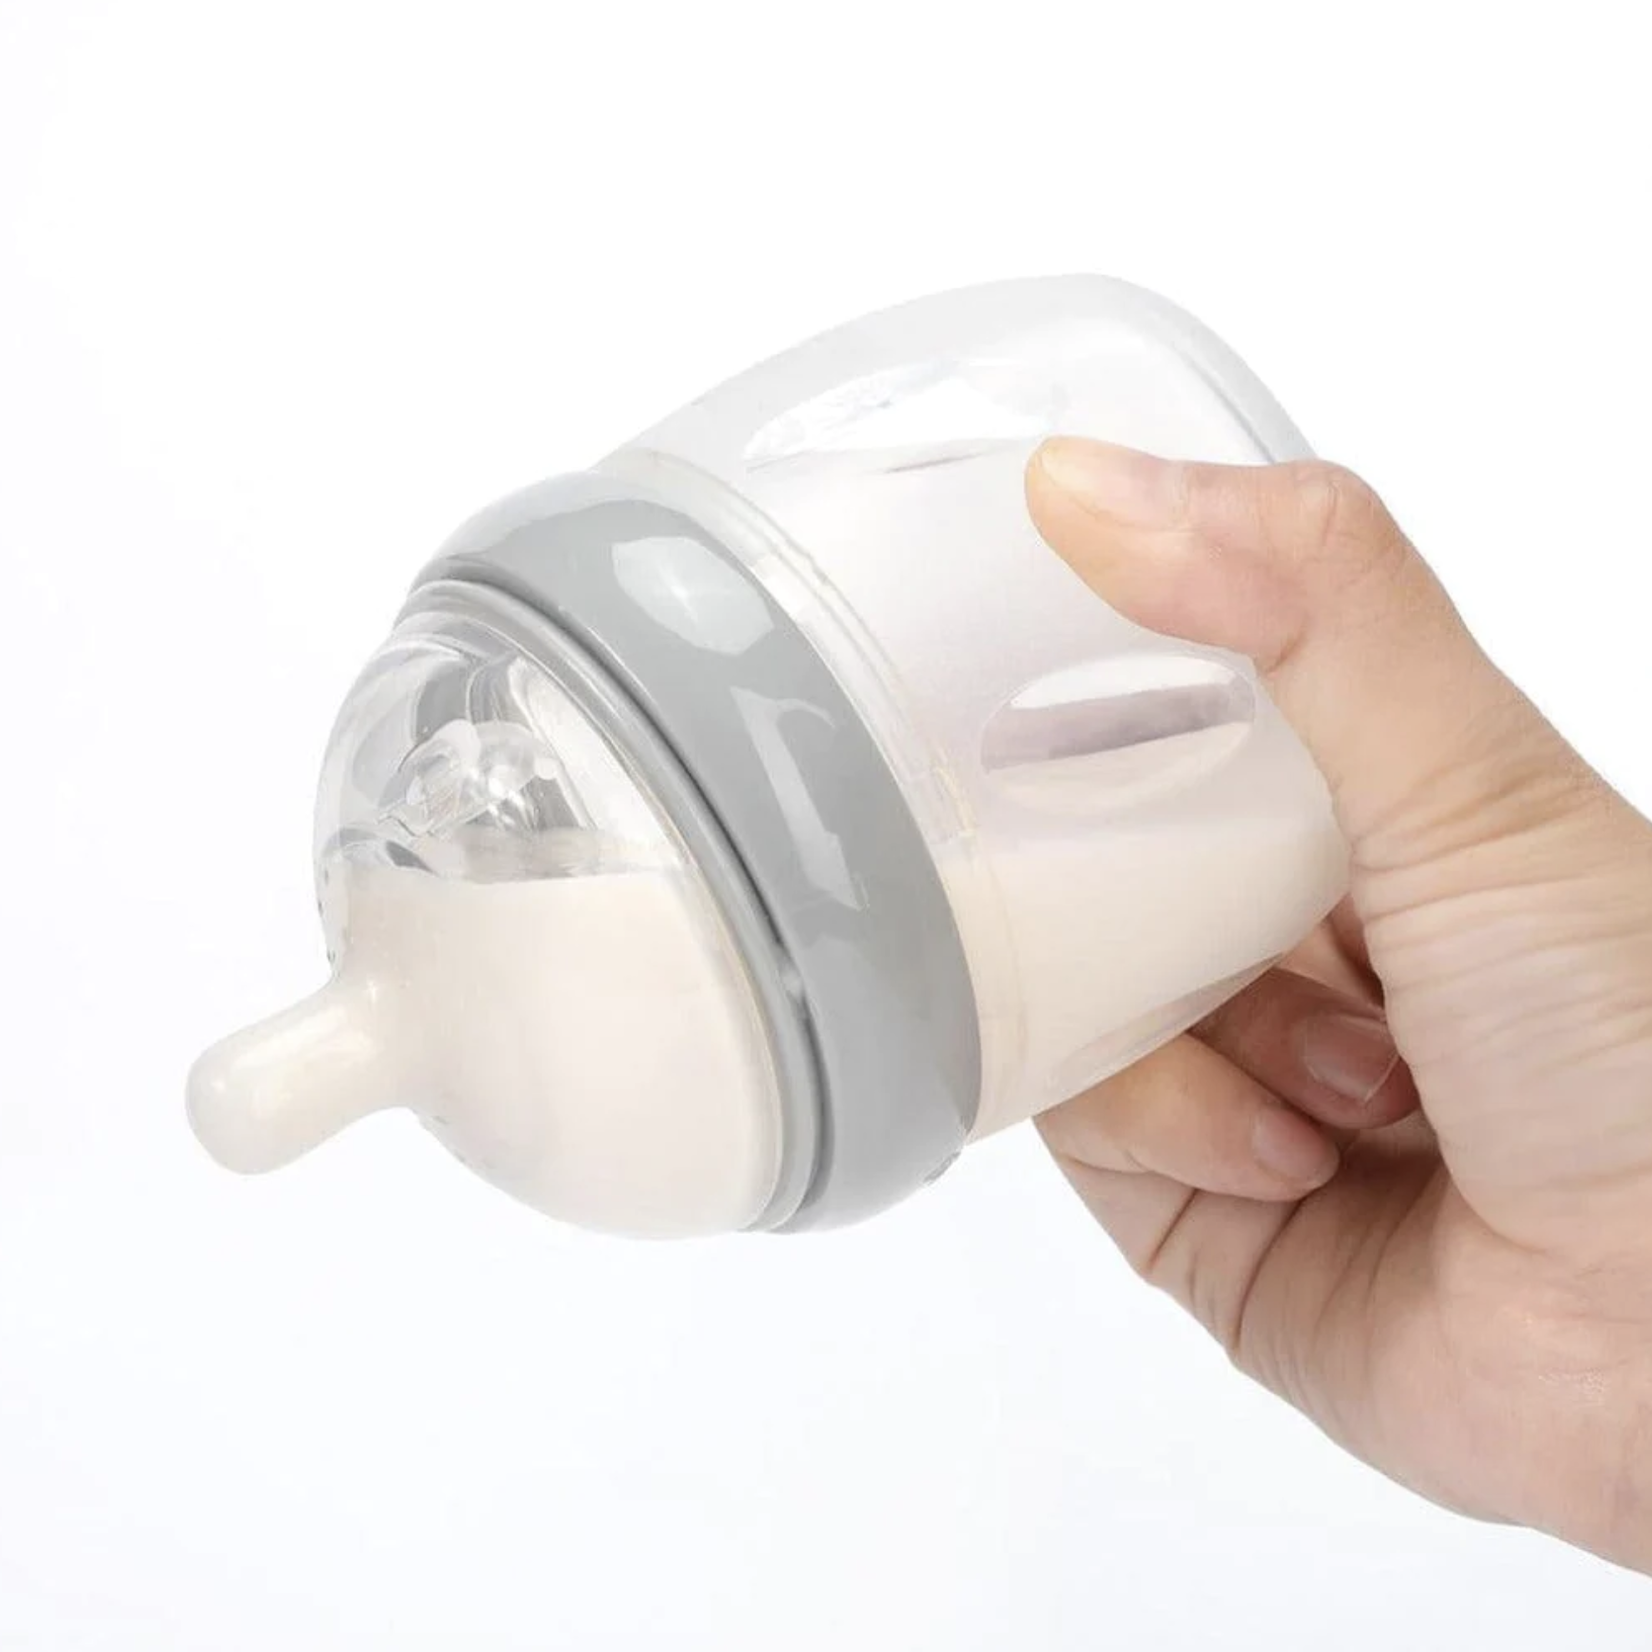 Haakaa Generation 3 Silicone Bottle Anti-Colic Nipple Medium